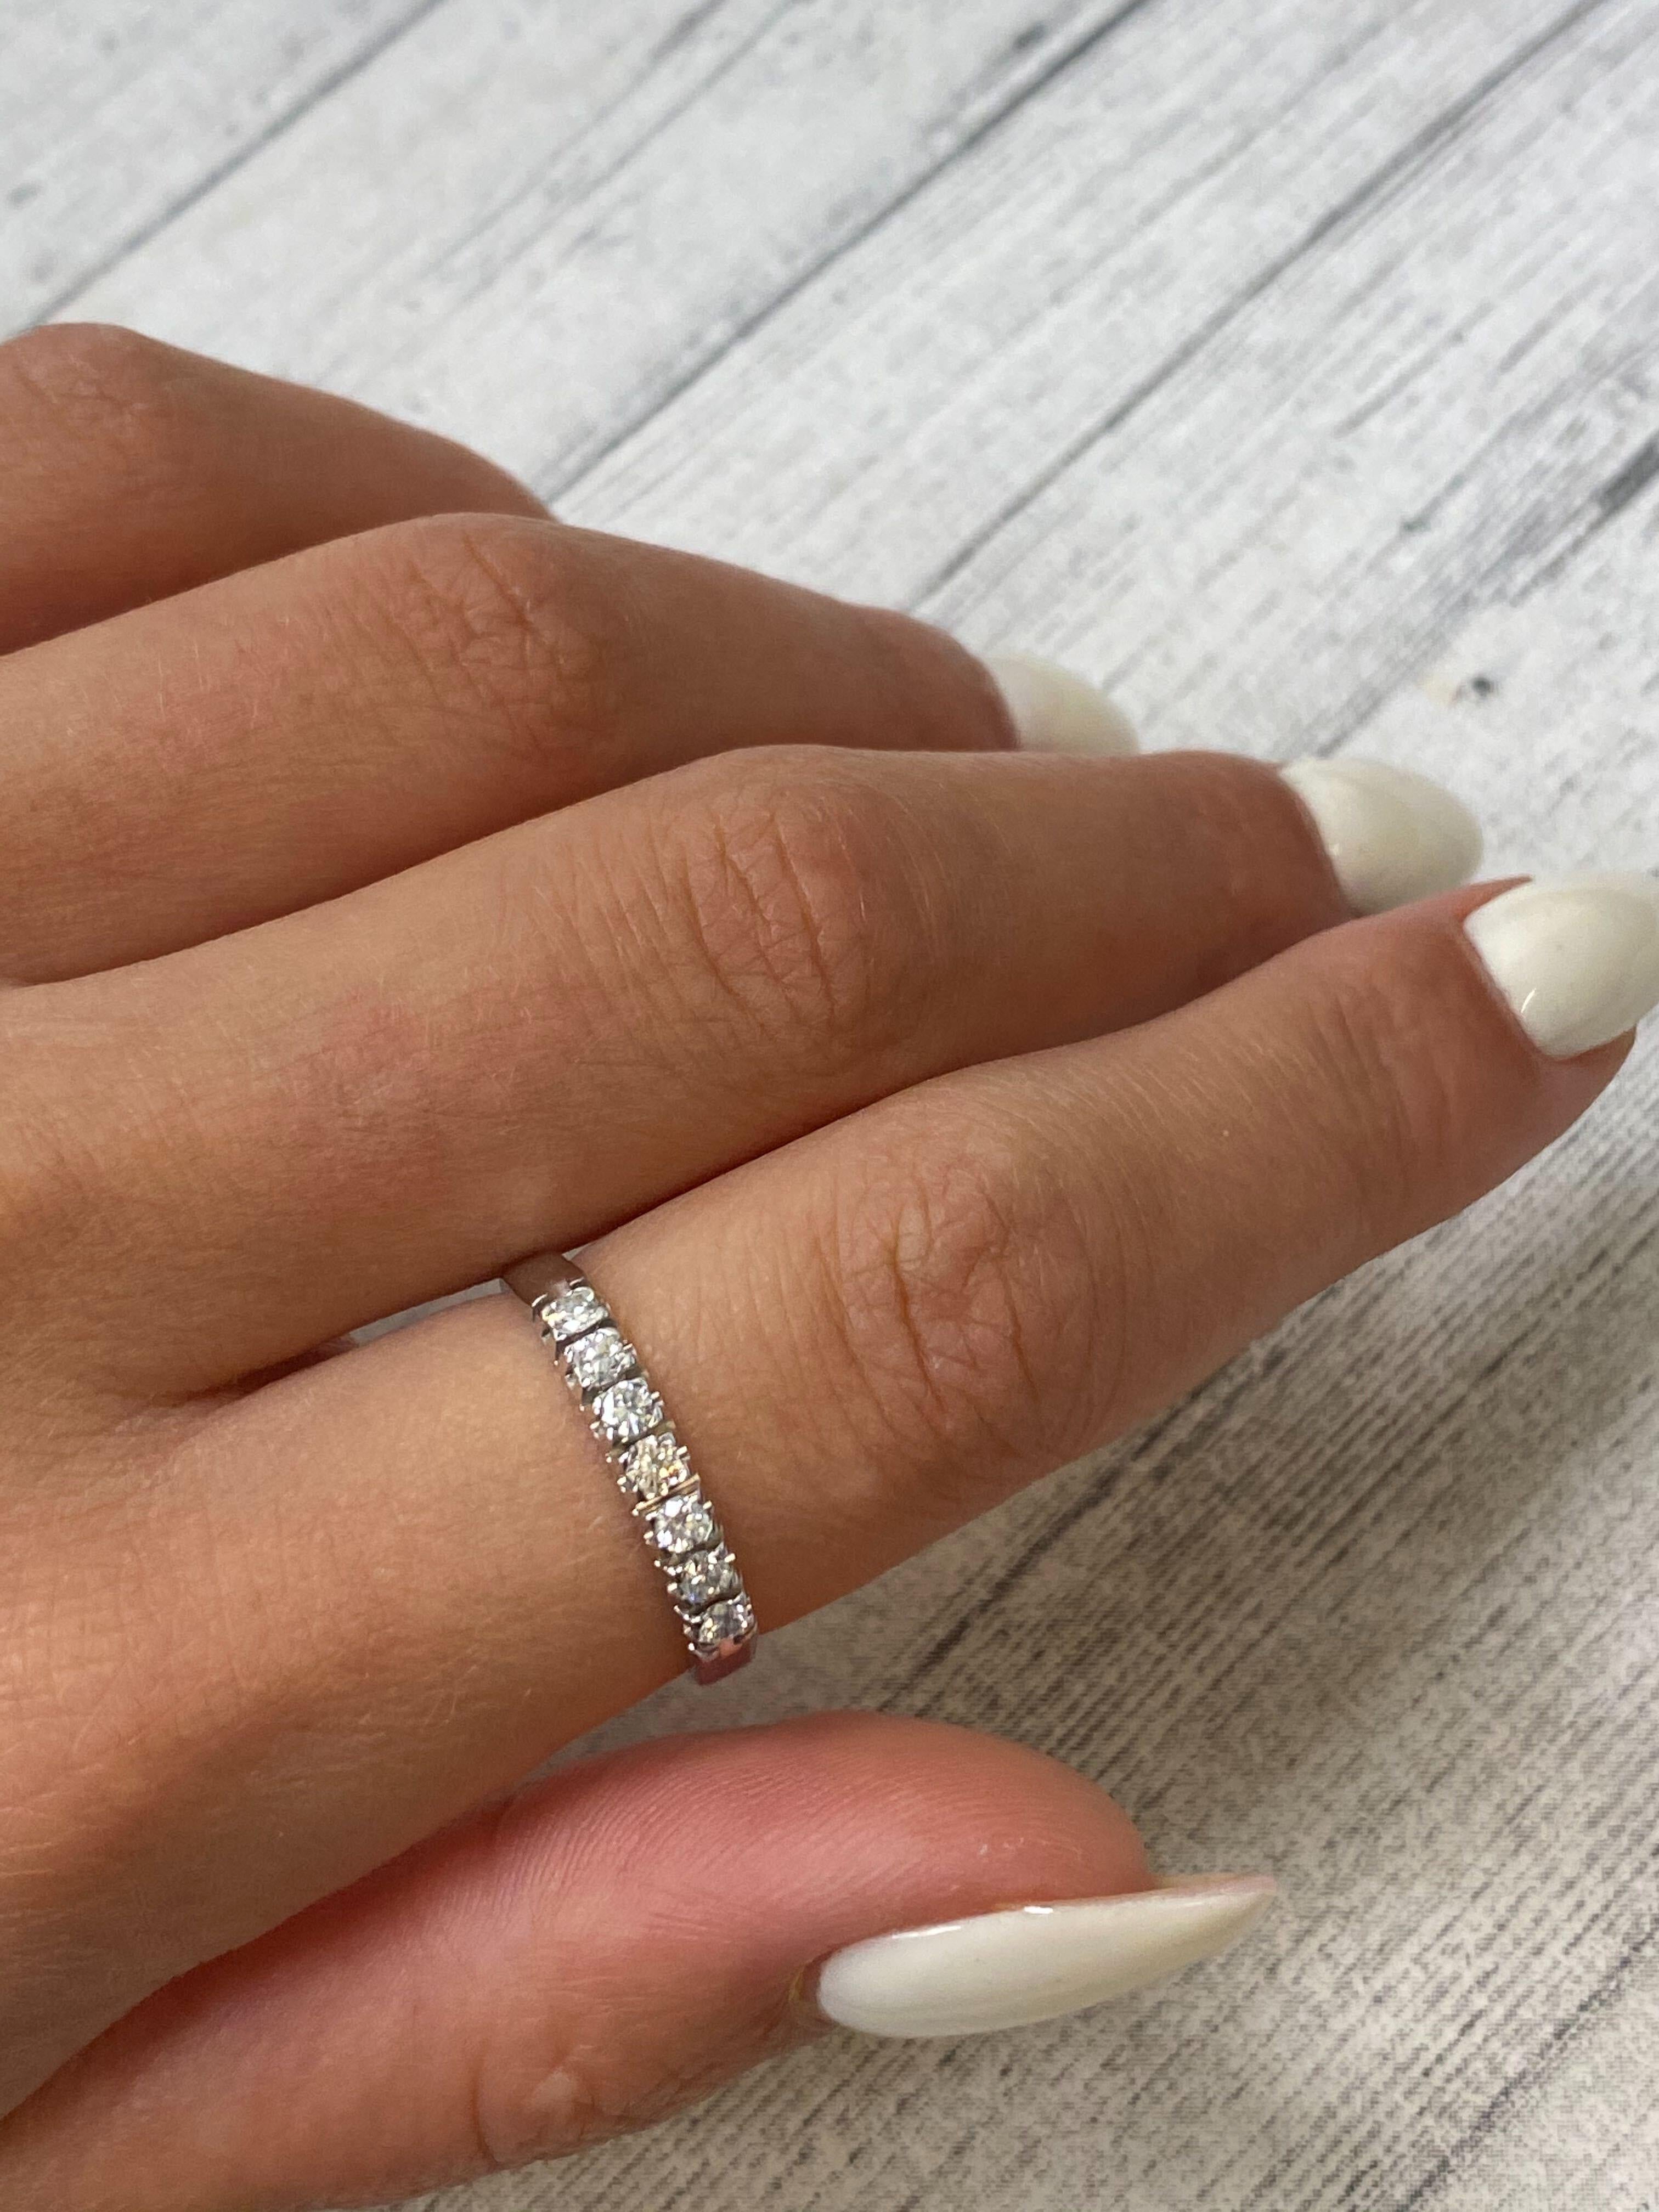 Rachel Koen Pave Diamond Wedding Band Ring 14K White Gold 0.21Cttw For Sale 1